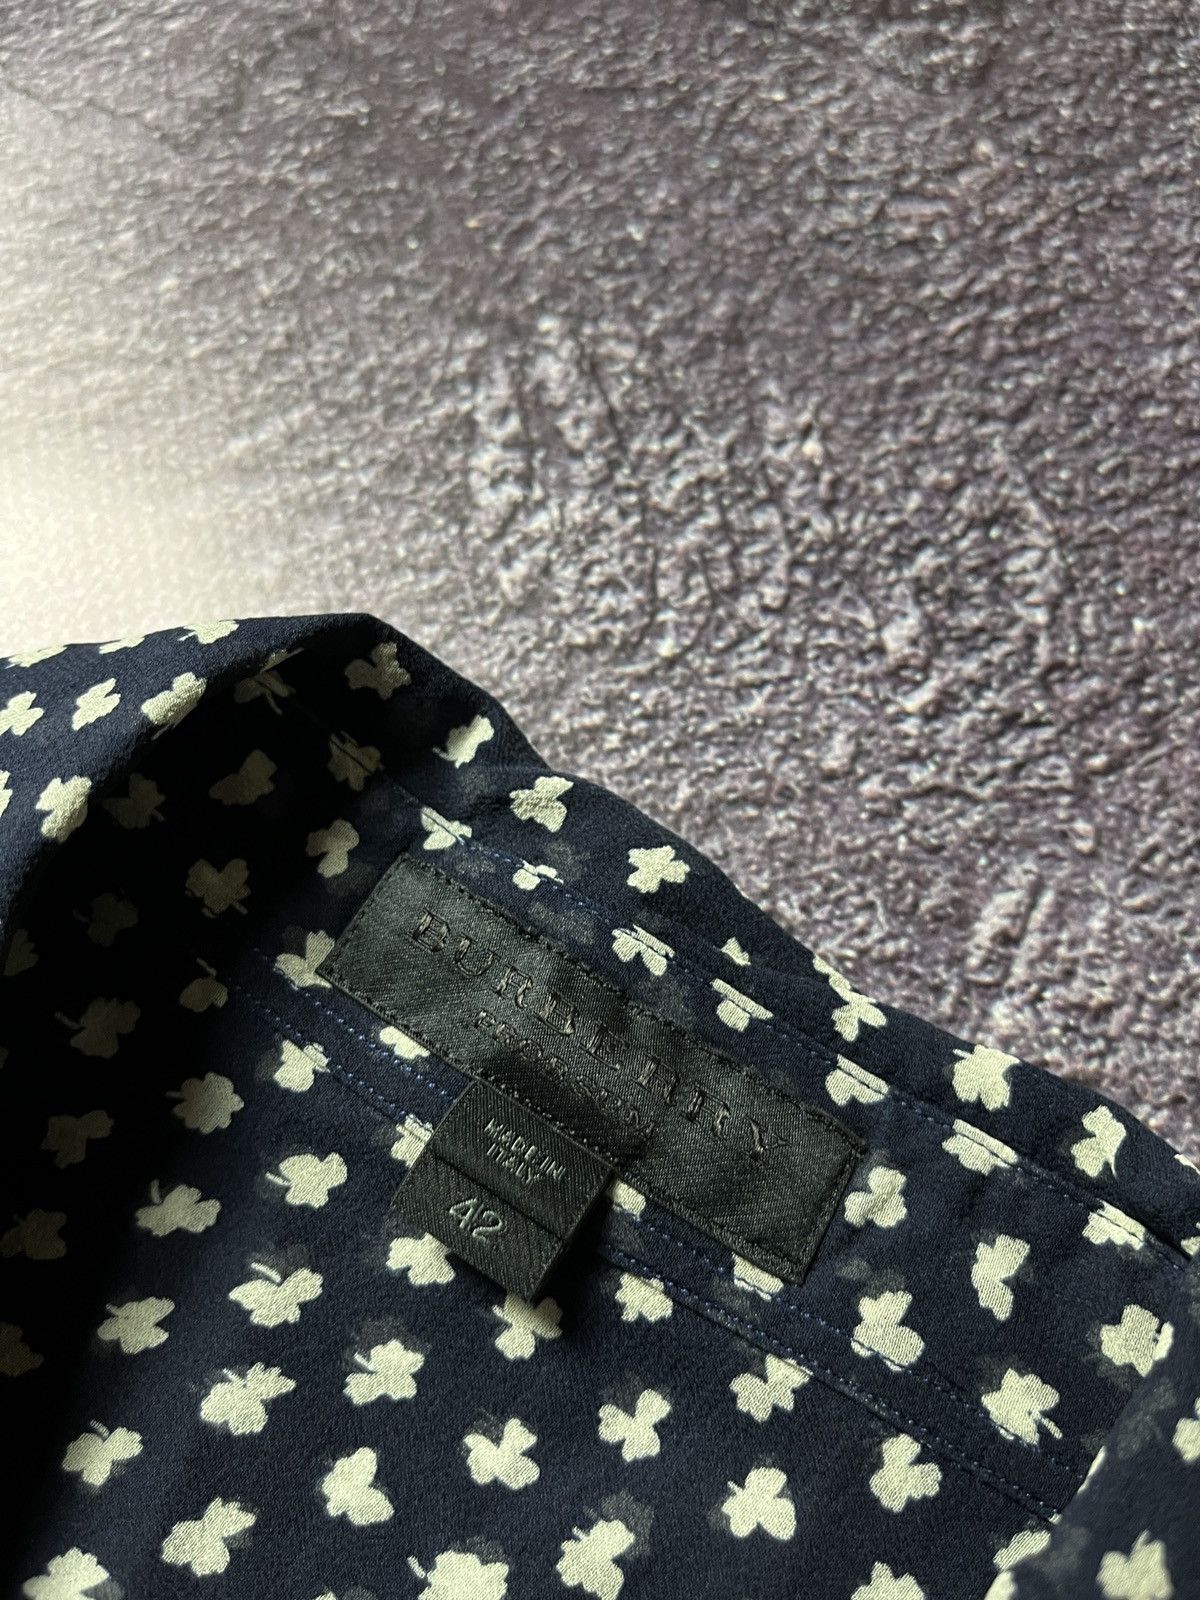 Burberry Prorsum Burberry Prorsum Black Label Floral Print Silk Shirt In Navy Size M / US 6-8 / IT 42-44 - 8 Thumbnail